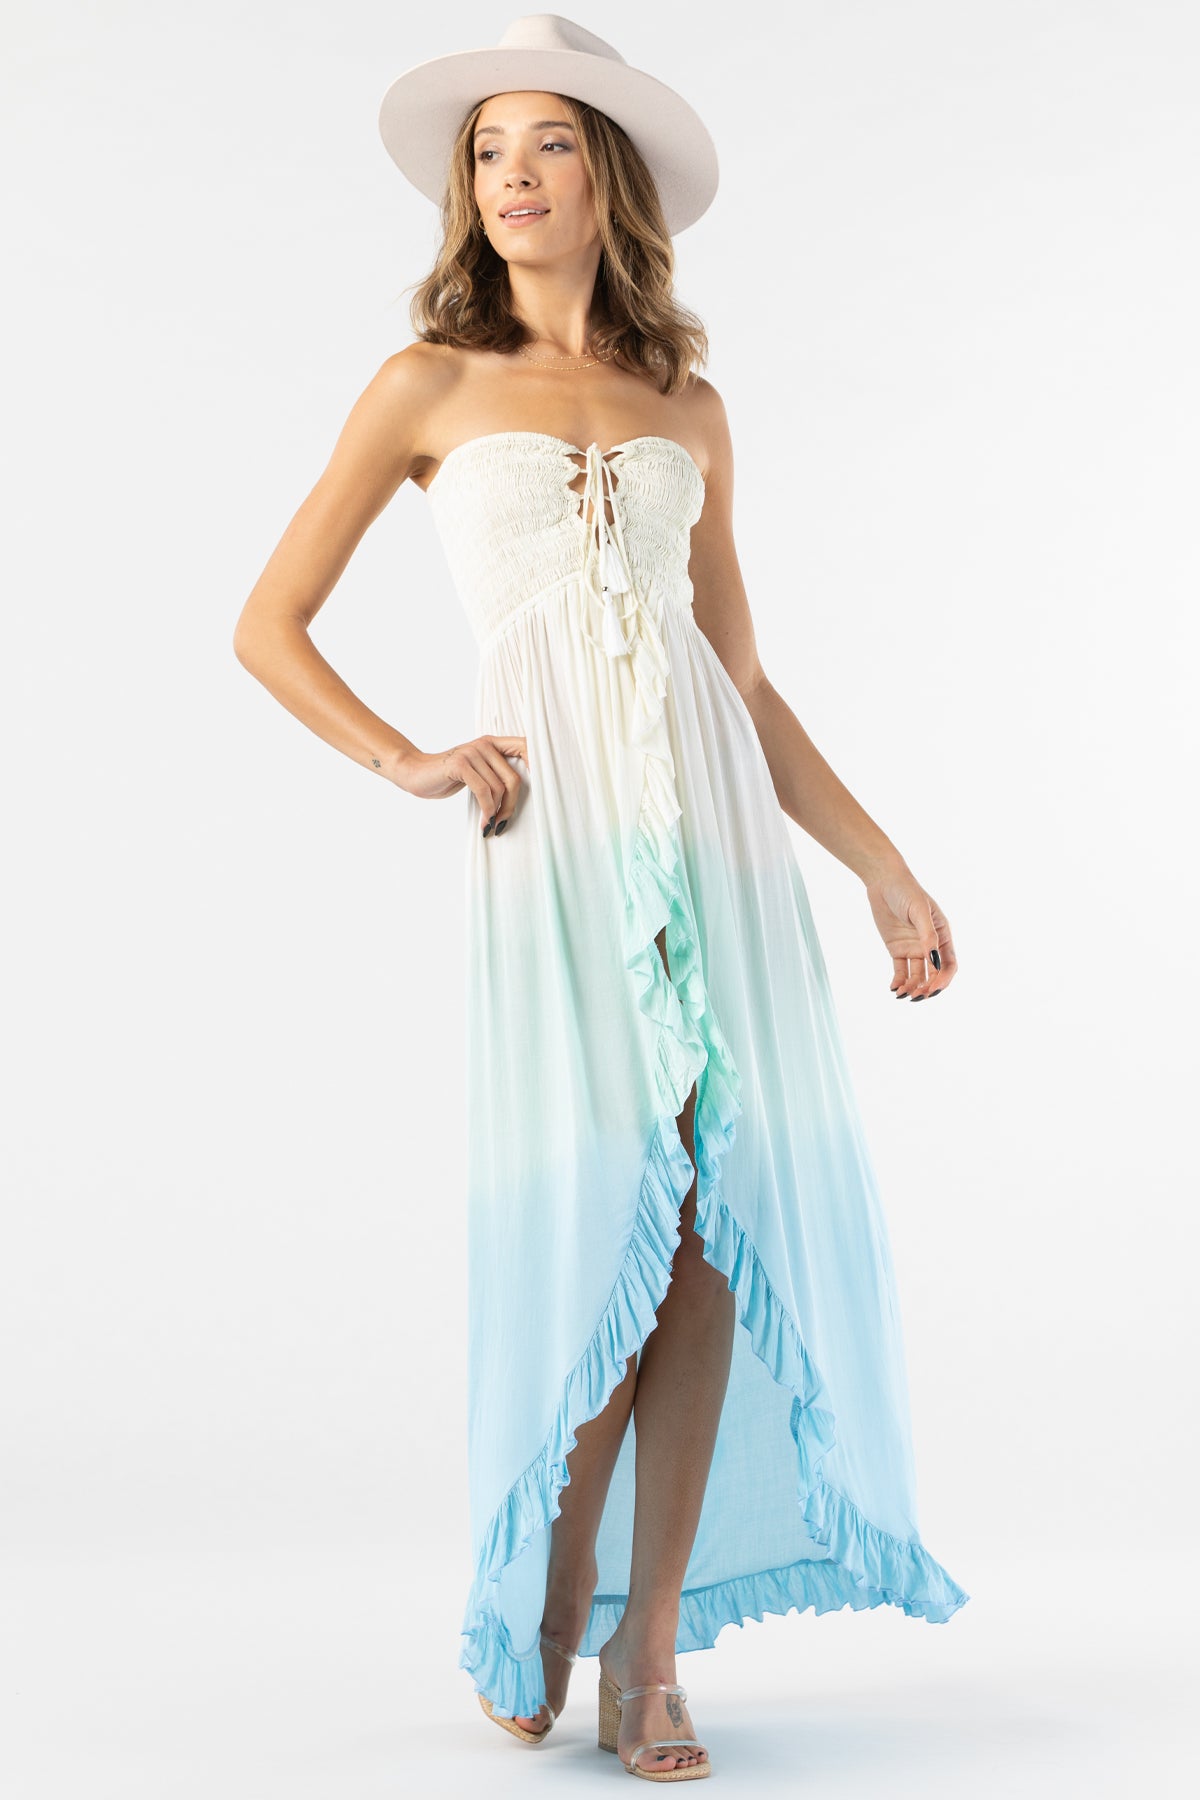 Tiare Hawaii Flynn Maxi Dress - Cream Teal Blue Ombre 